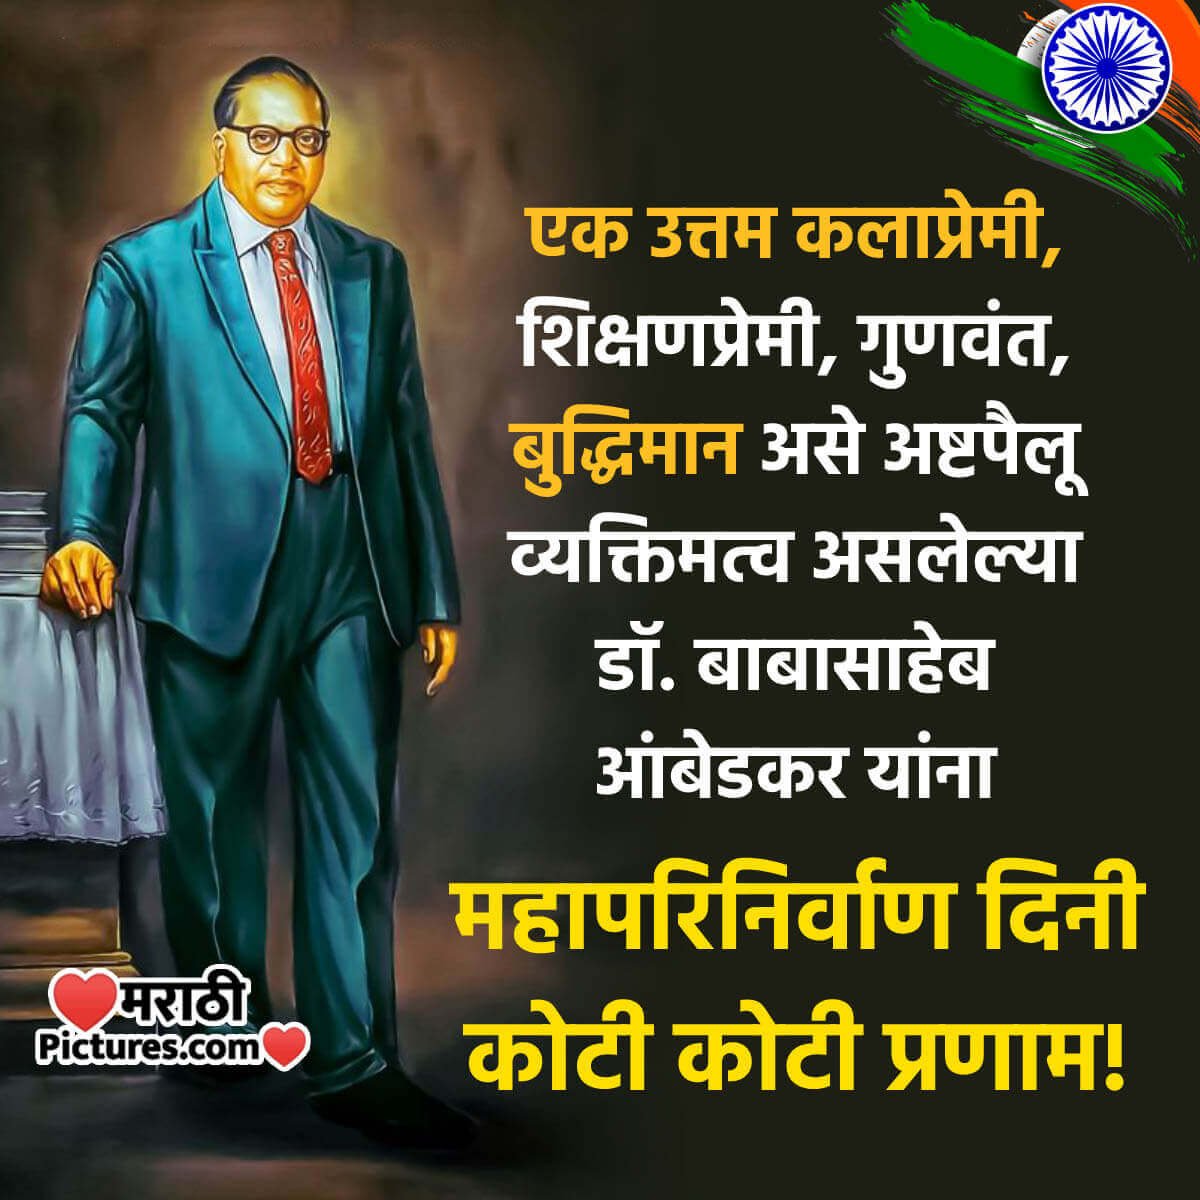 Mahaparinirvan Din Marathi Whatsapp Status Image